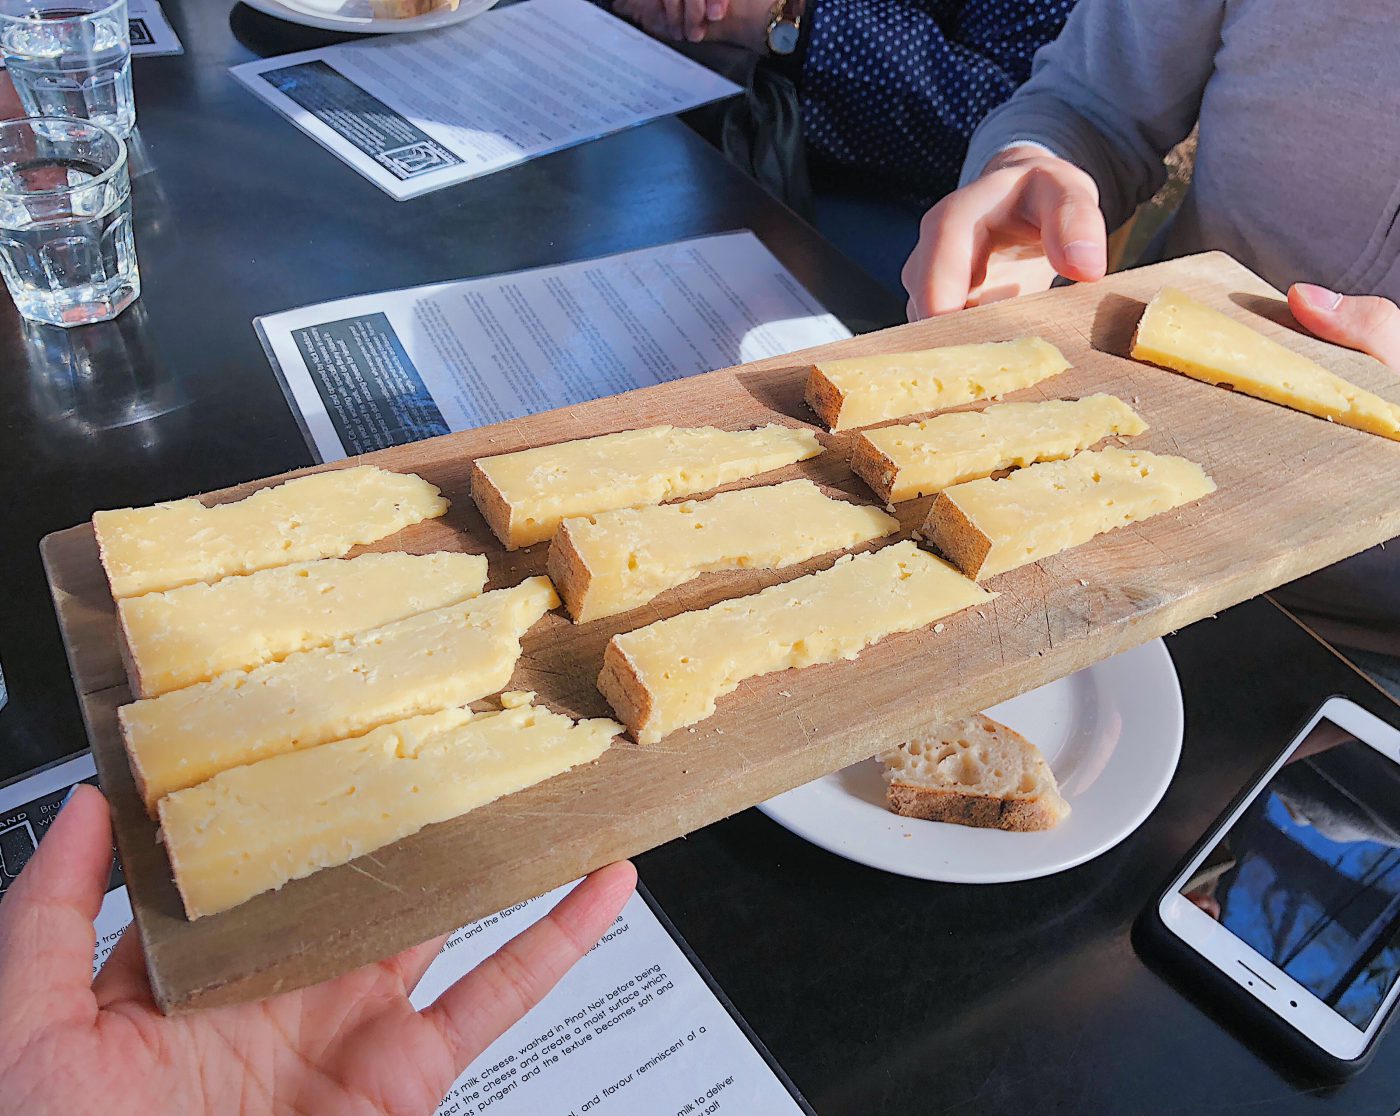 Cheese tasting at Bruny Island